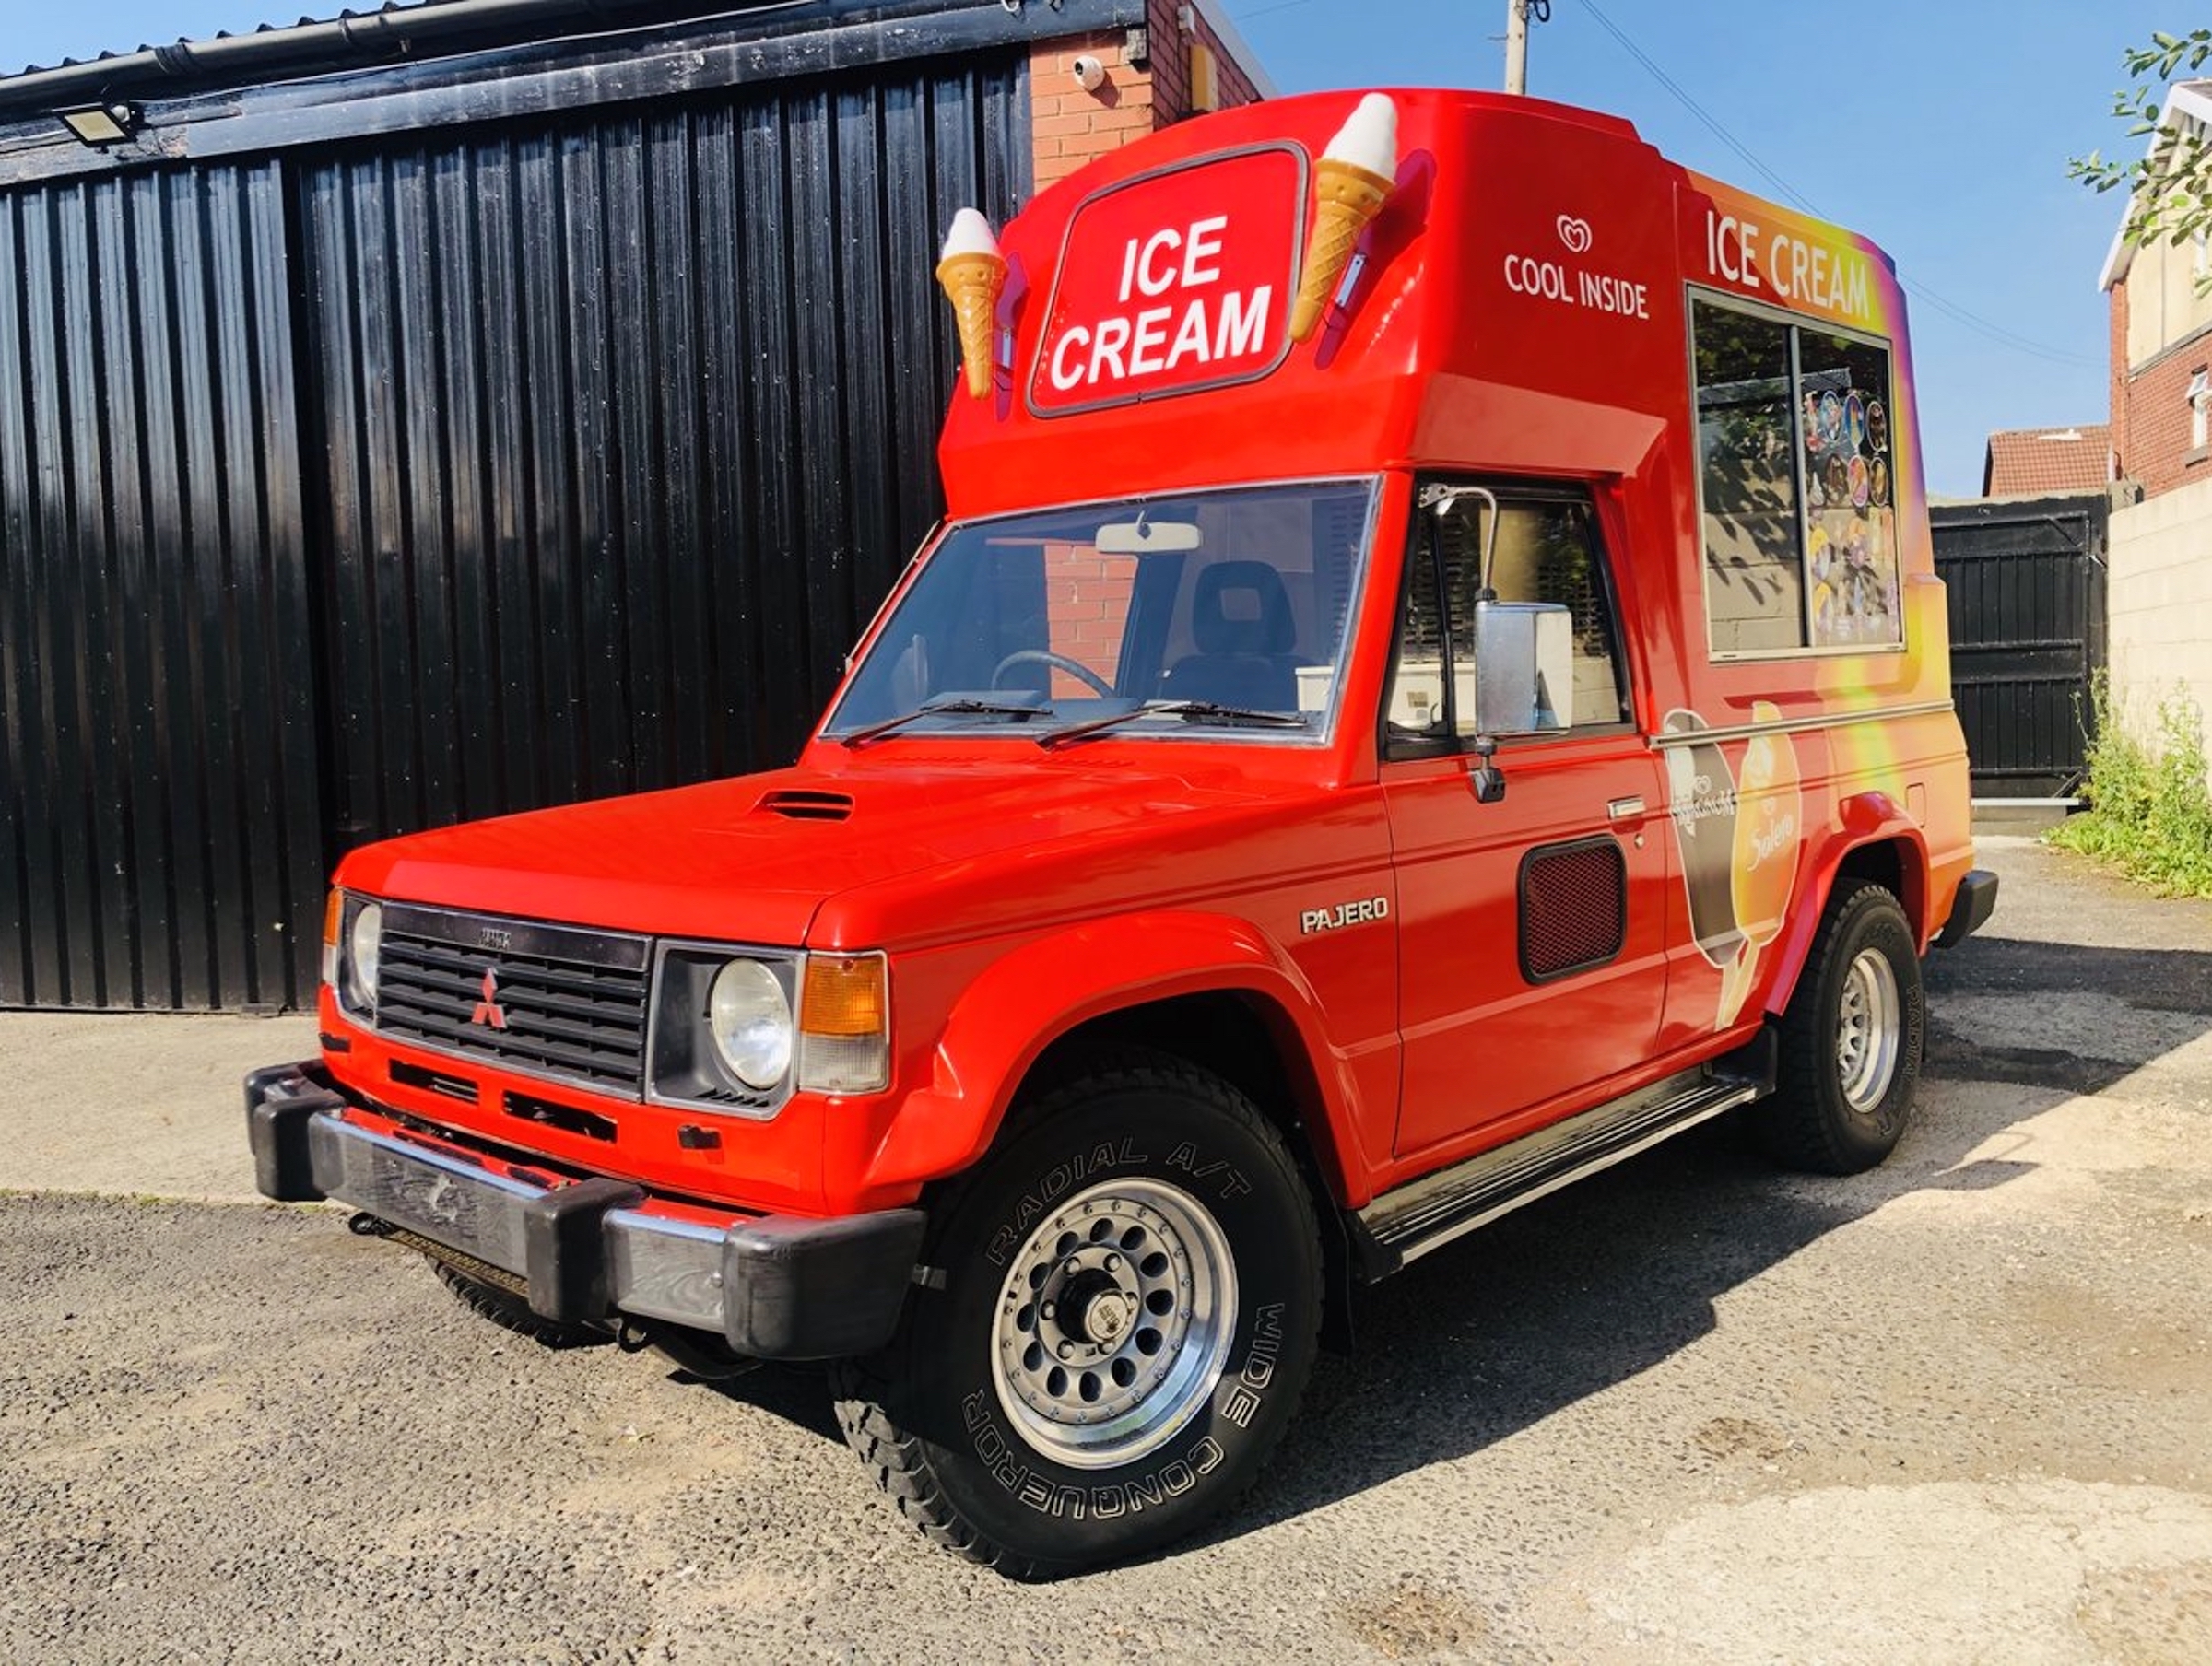 This Mitsubishi Pajero ice cream van is perfect for wilderness snack cravings